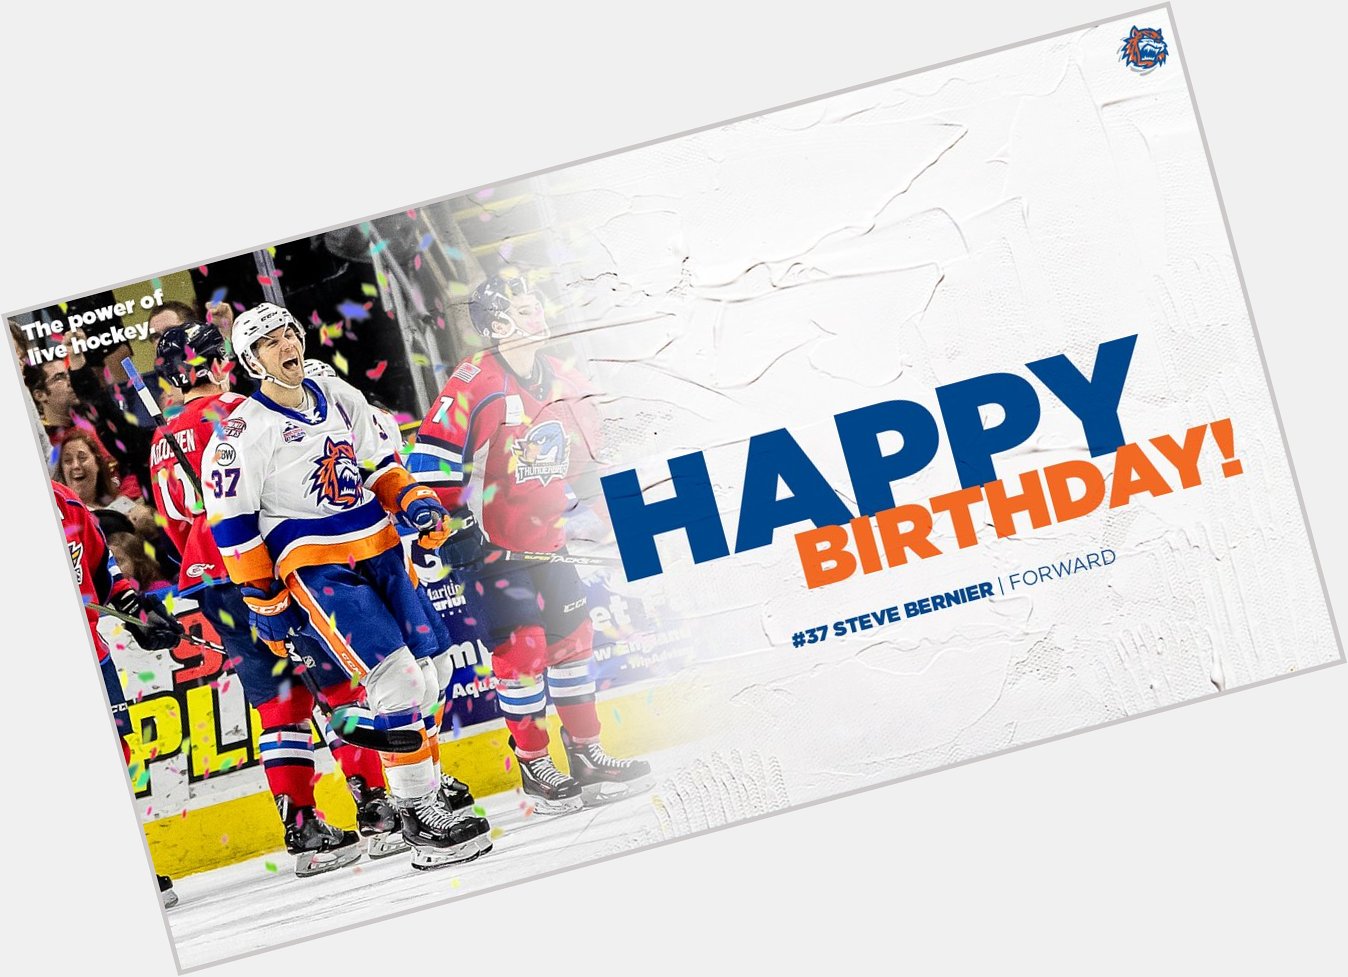 Tap the to wish forward Steve Bernier a happy birthday!   